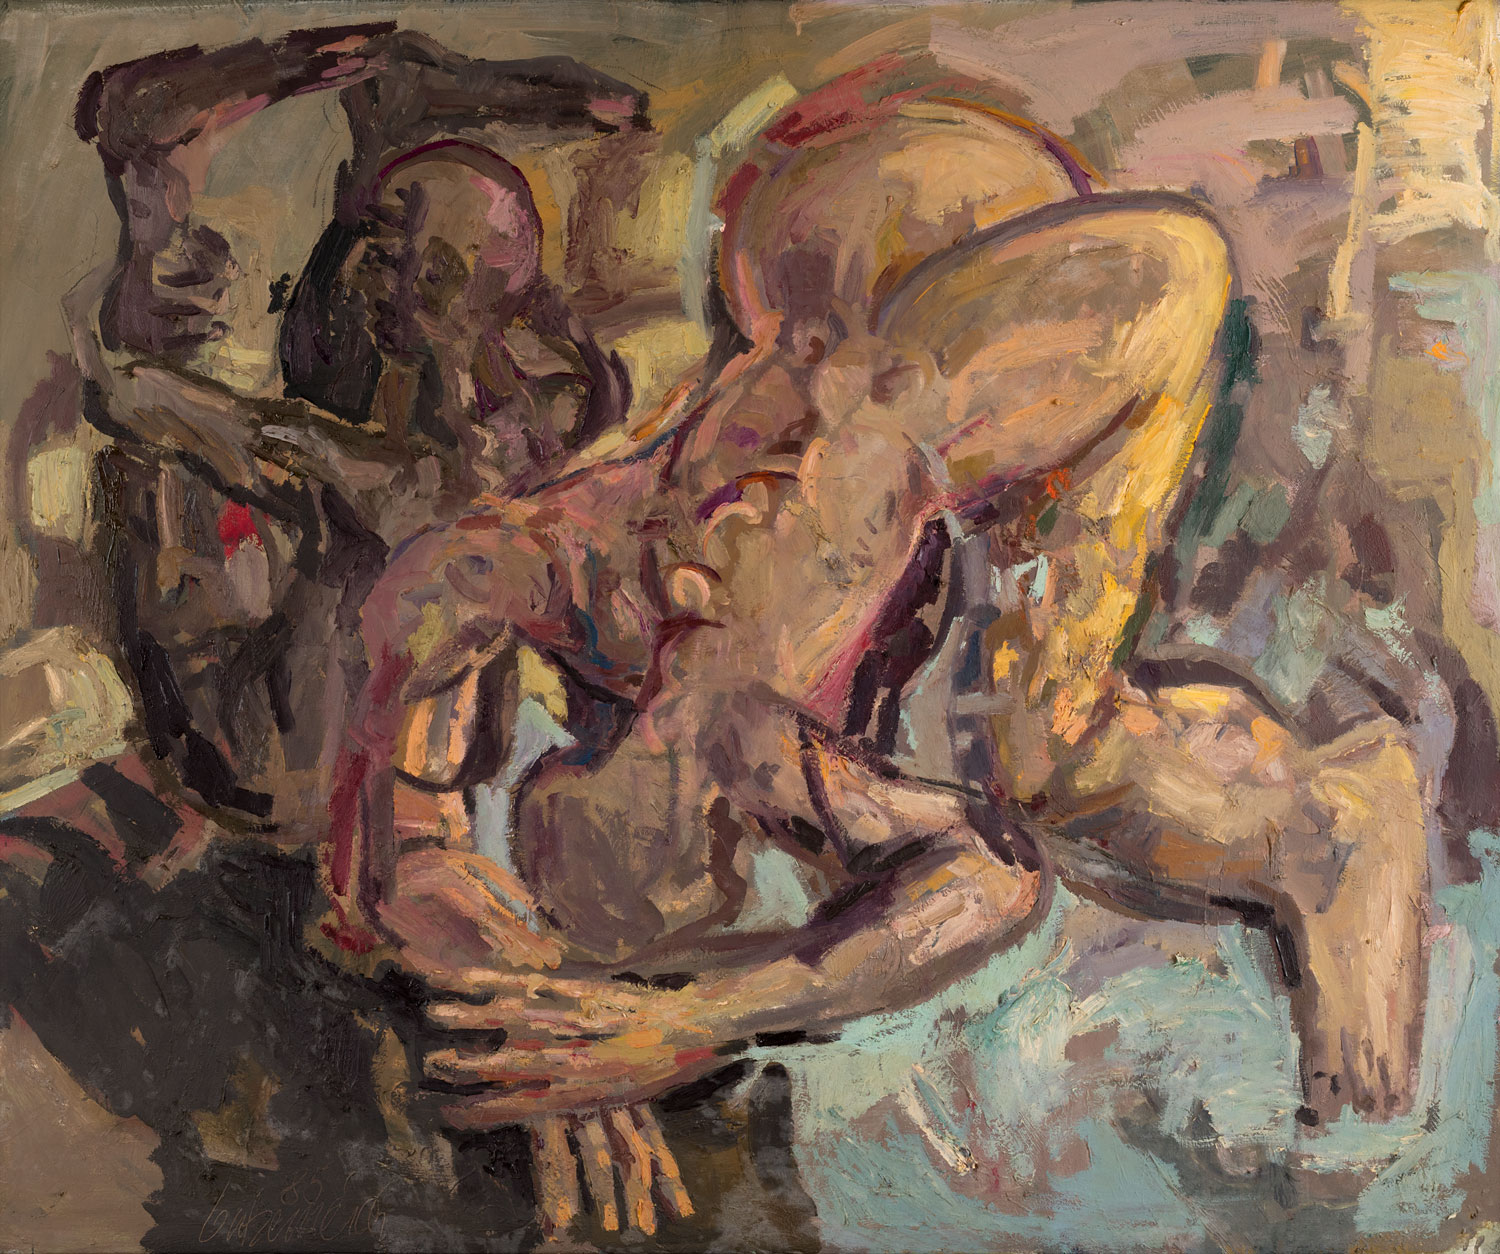 Thomas Gatzemeier | Verbeugung | 1985 | Öl auf Leinwand | 110 x 130 cm